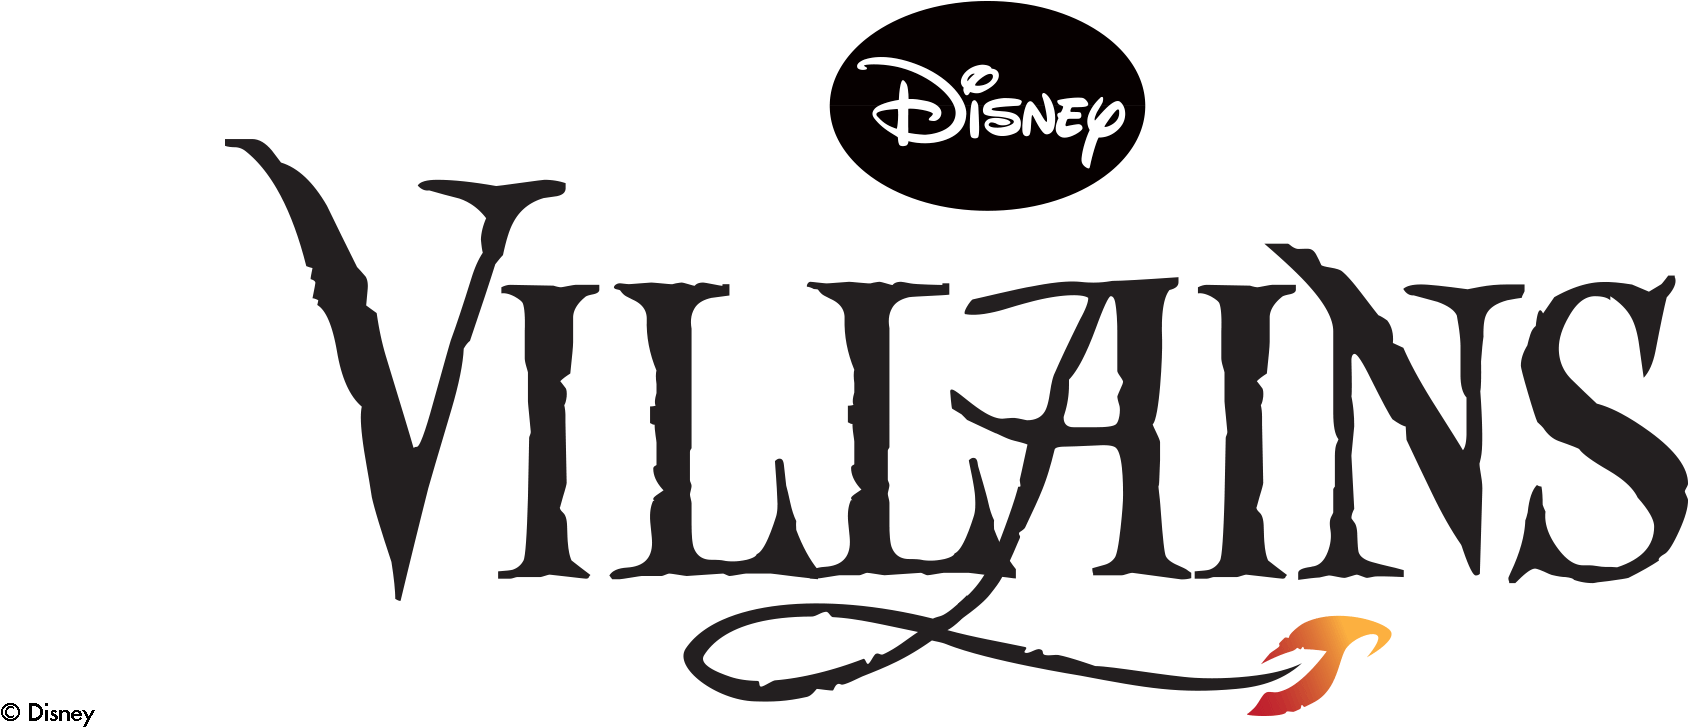 Disney Villains Disney